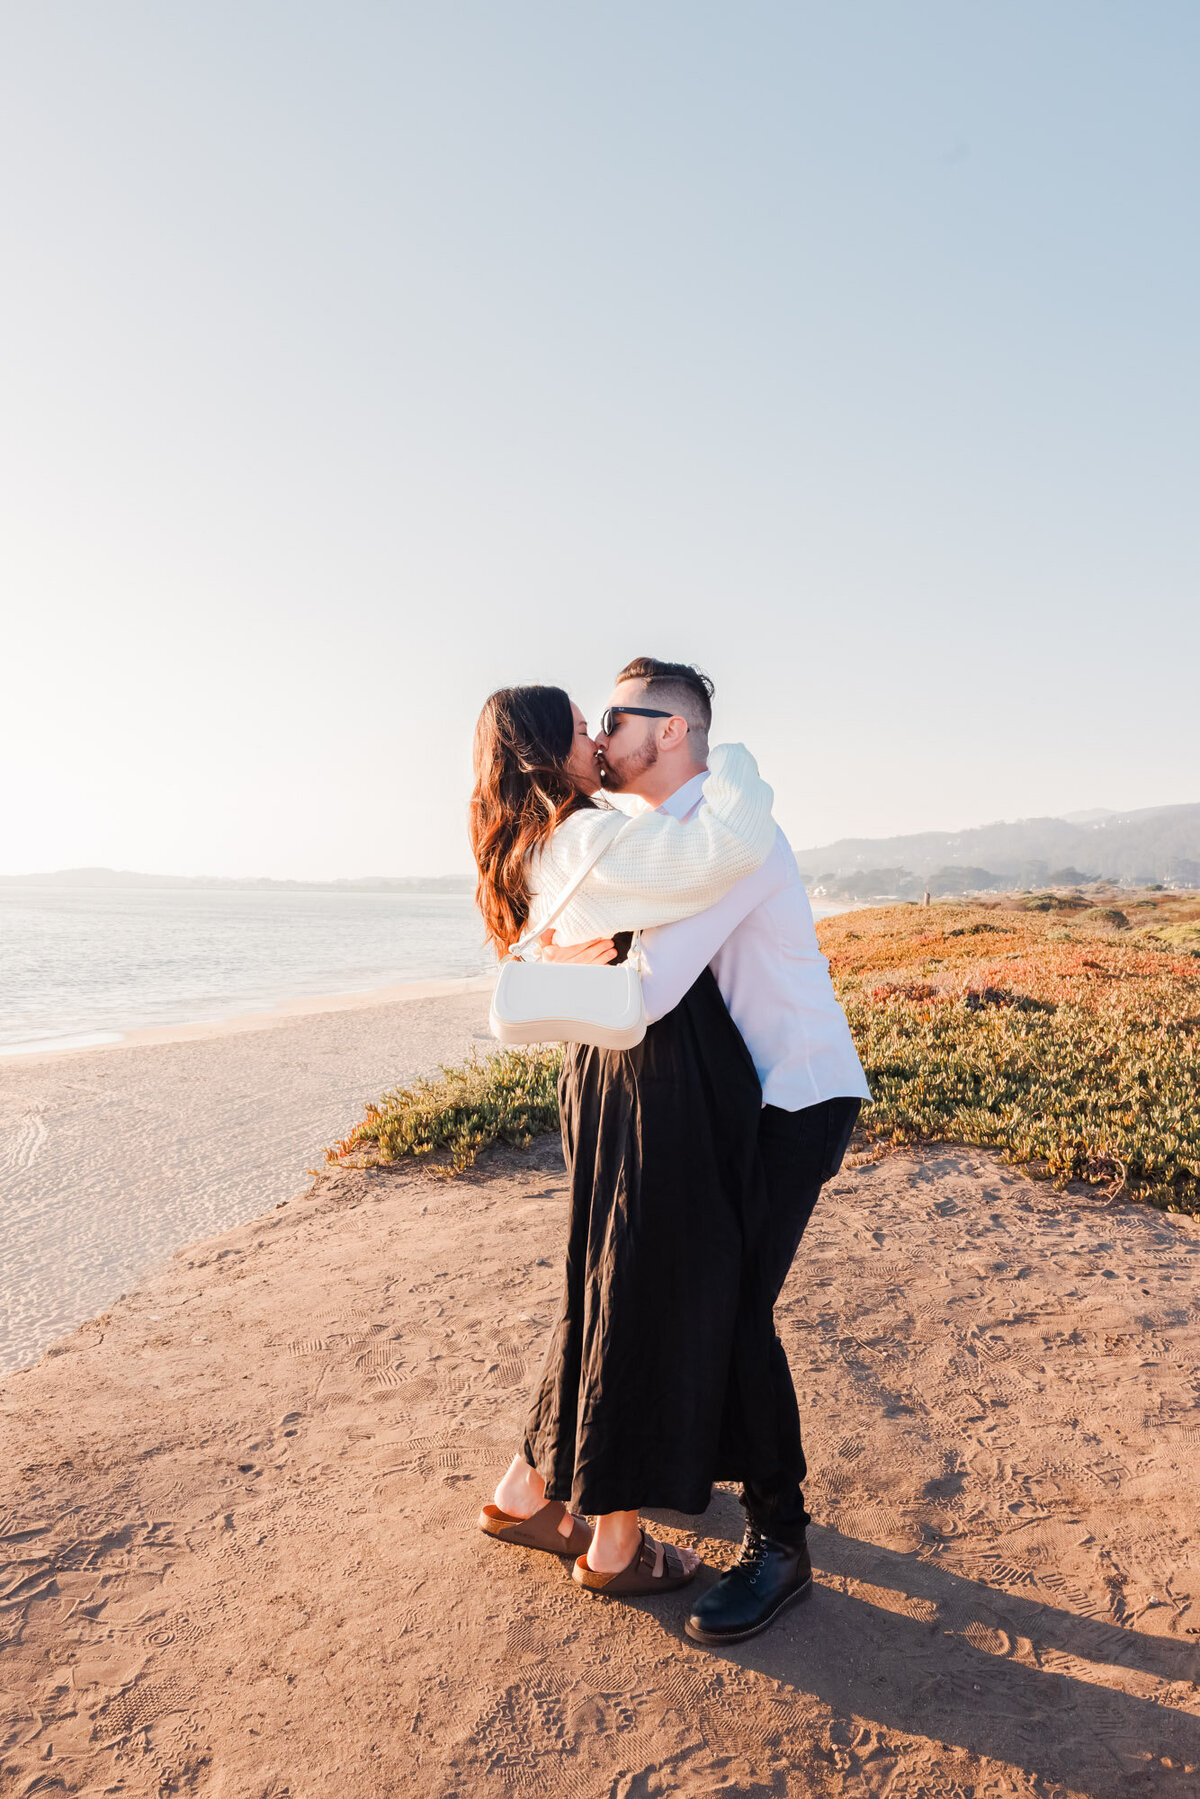 Kyle Woolum + Stephanie-Proposal Engagement-Half Moon Bay-Dunes Beach-San Francisco Wedding Photographer-San Francisco Photographer-Half Moon Bay Photographer-Emily Pillon Photography-S-092323-11